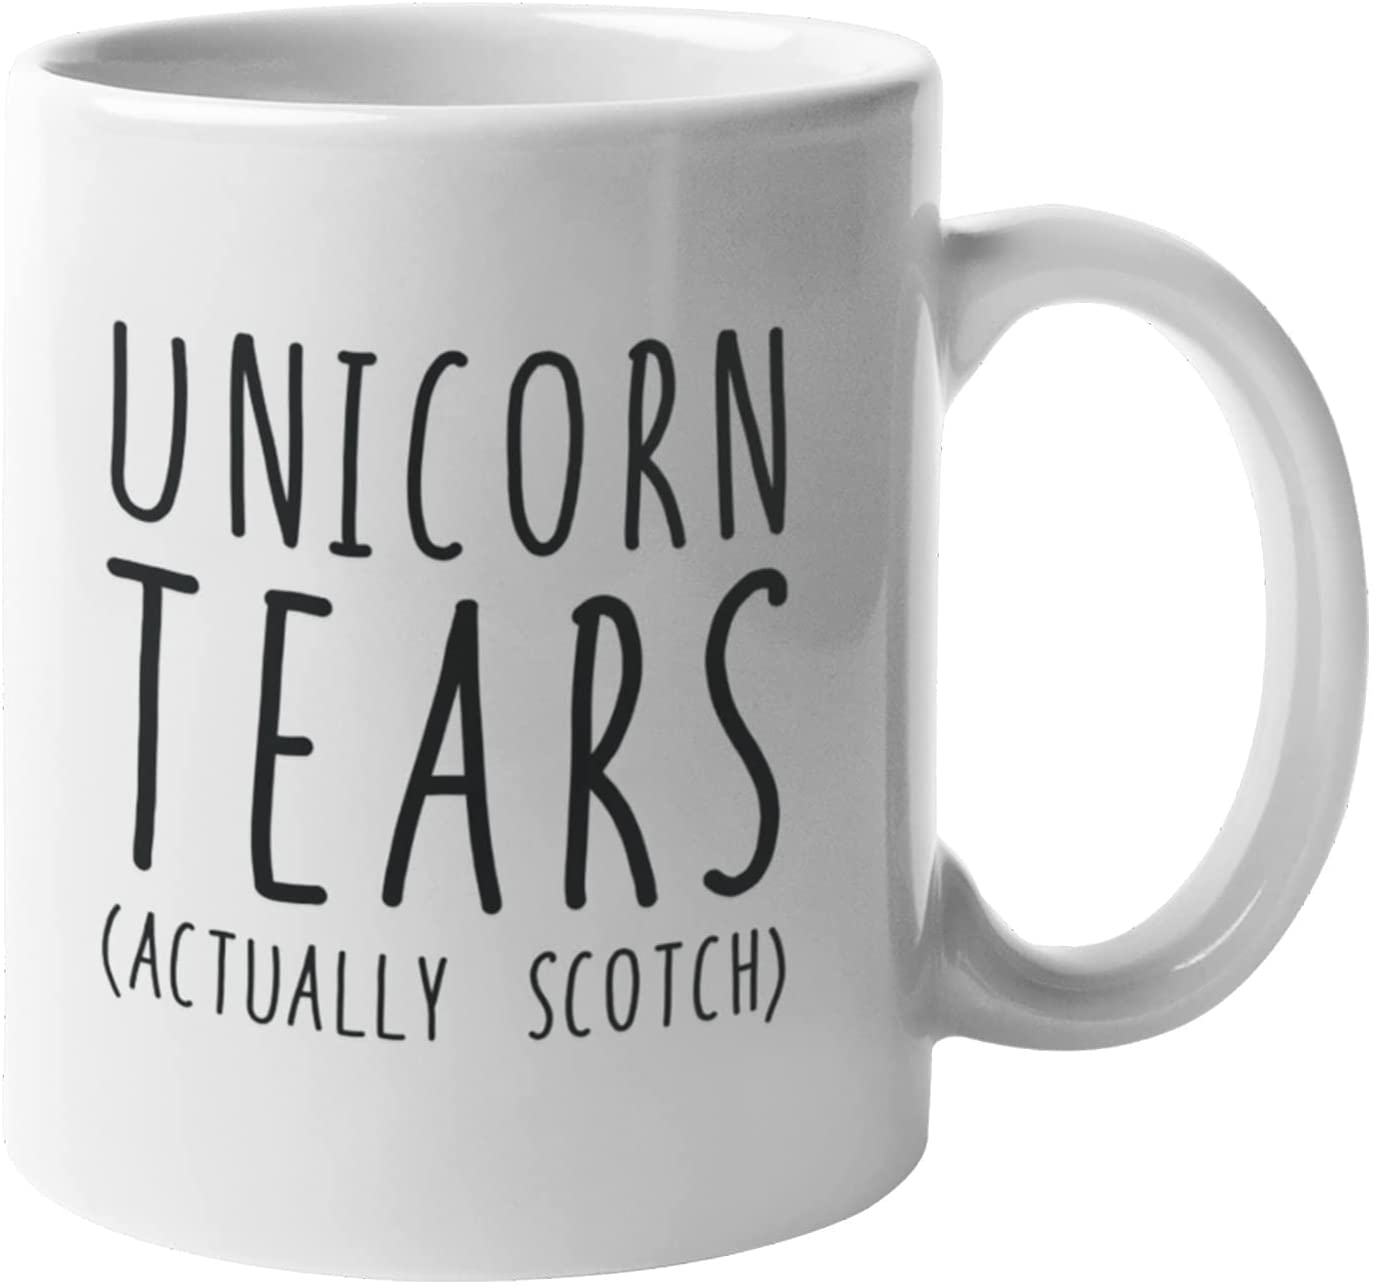 Unicorn Tears Actually Scotch Coffee Mug - Funny 11oz Ceramic Coffee Cup